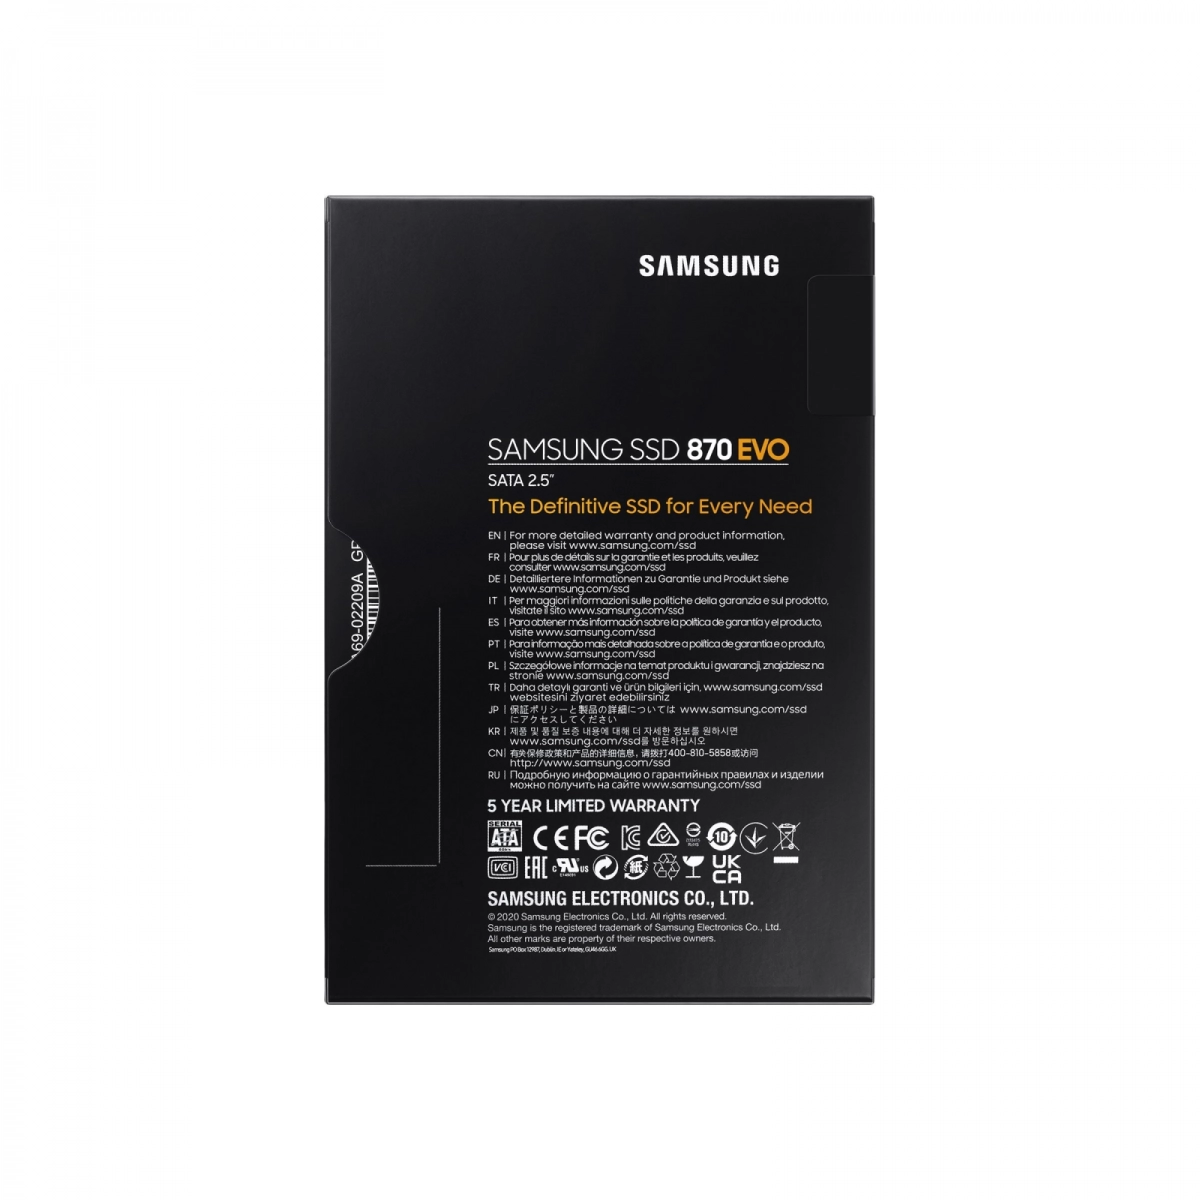 Notebook-Festplatte 1TB, SSD SATA3 für ASUS R700V